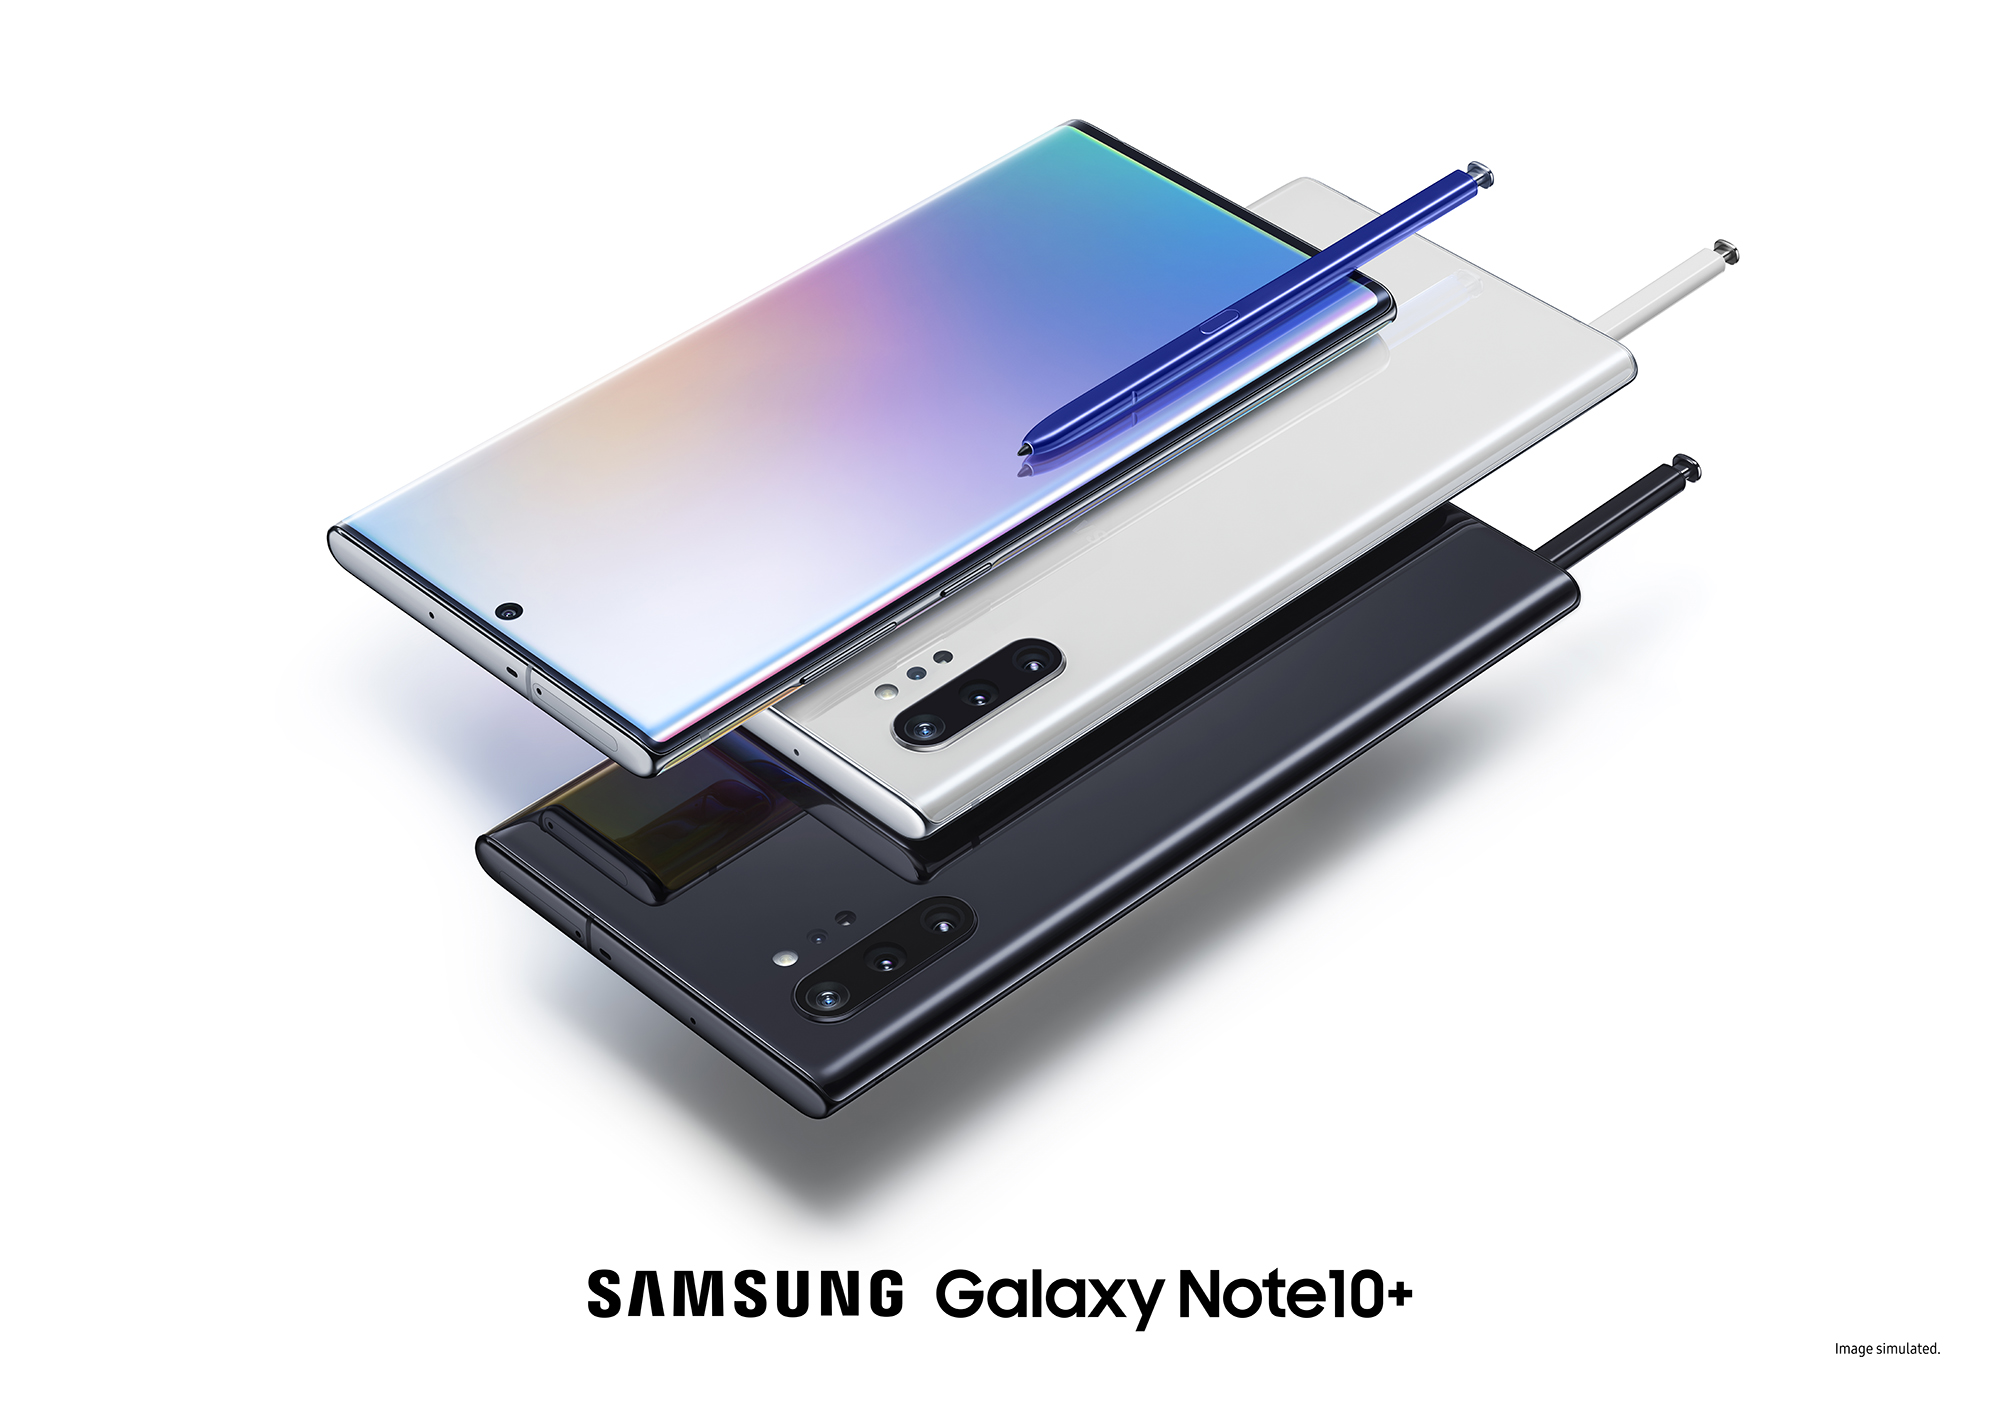 Samsung Galaxy Note 10 dan Galaxy Note 10+: Fitur Baru, Spesifikasi, Tanggal Rilis, dan Ketersediaan